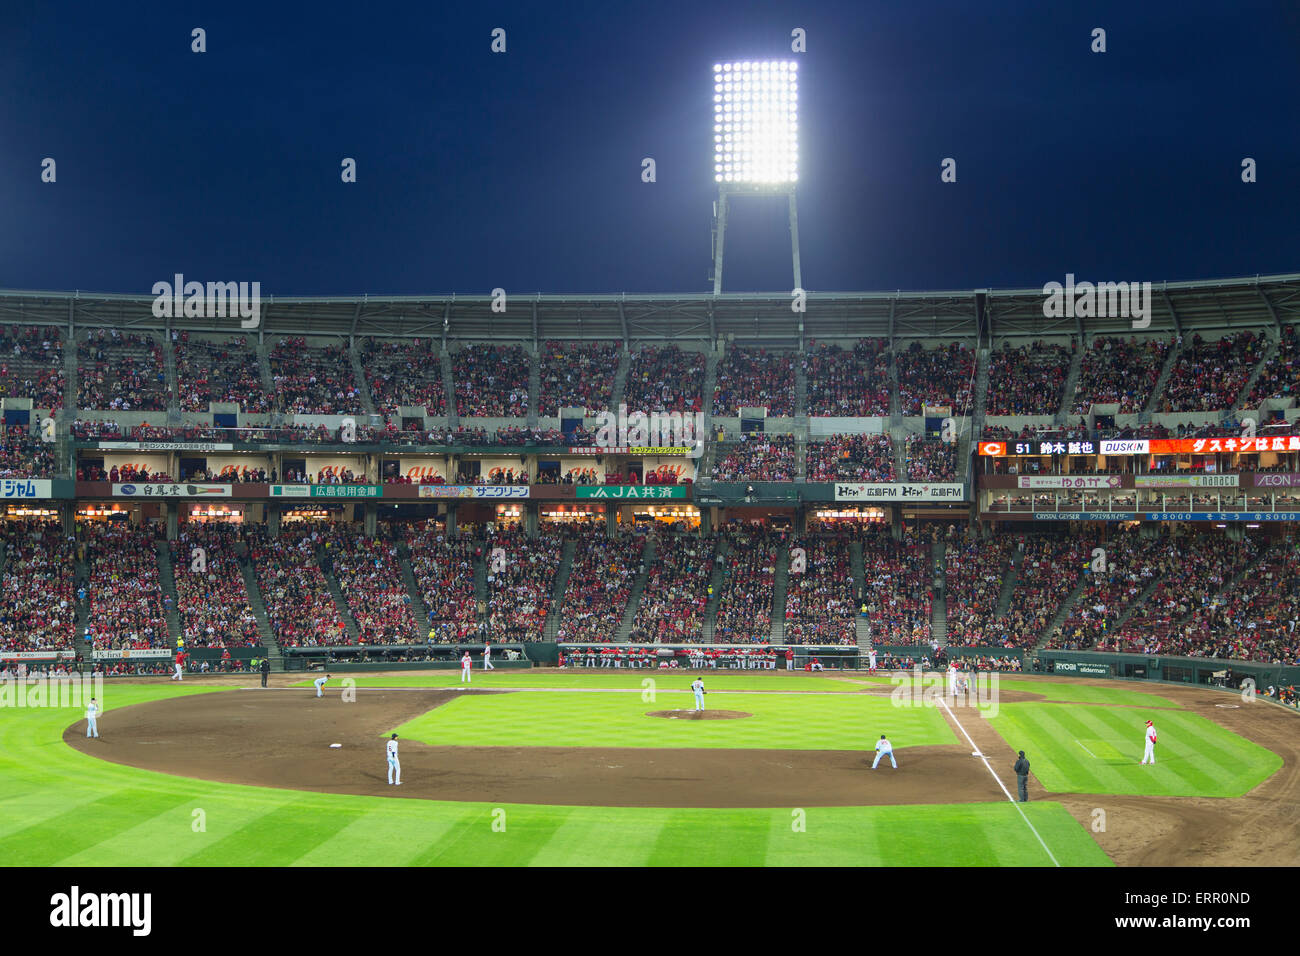 Baseball match of Hiroshima Toyo Carps inside MAZDA Zoom-Zoom Stock Photo -  Alamy